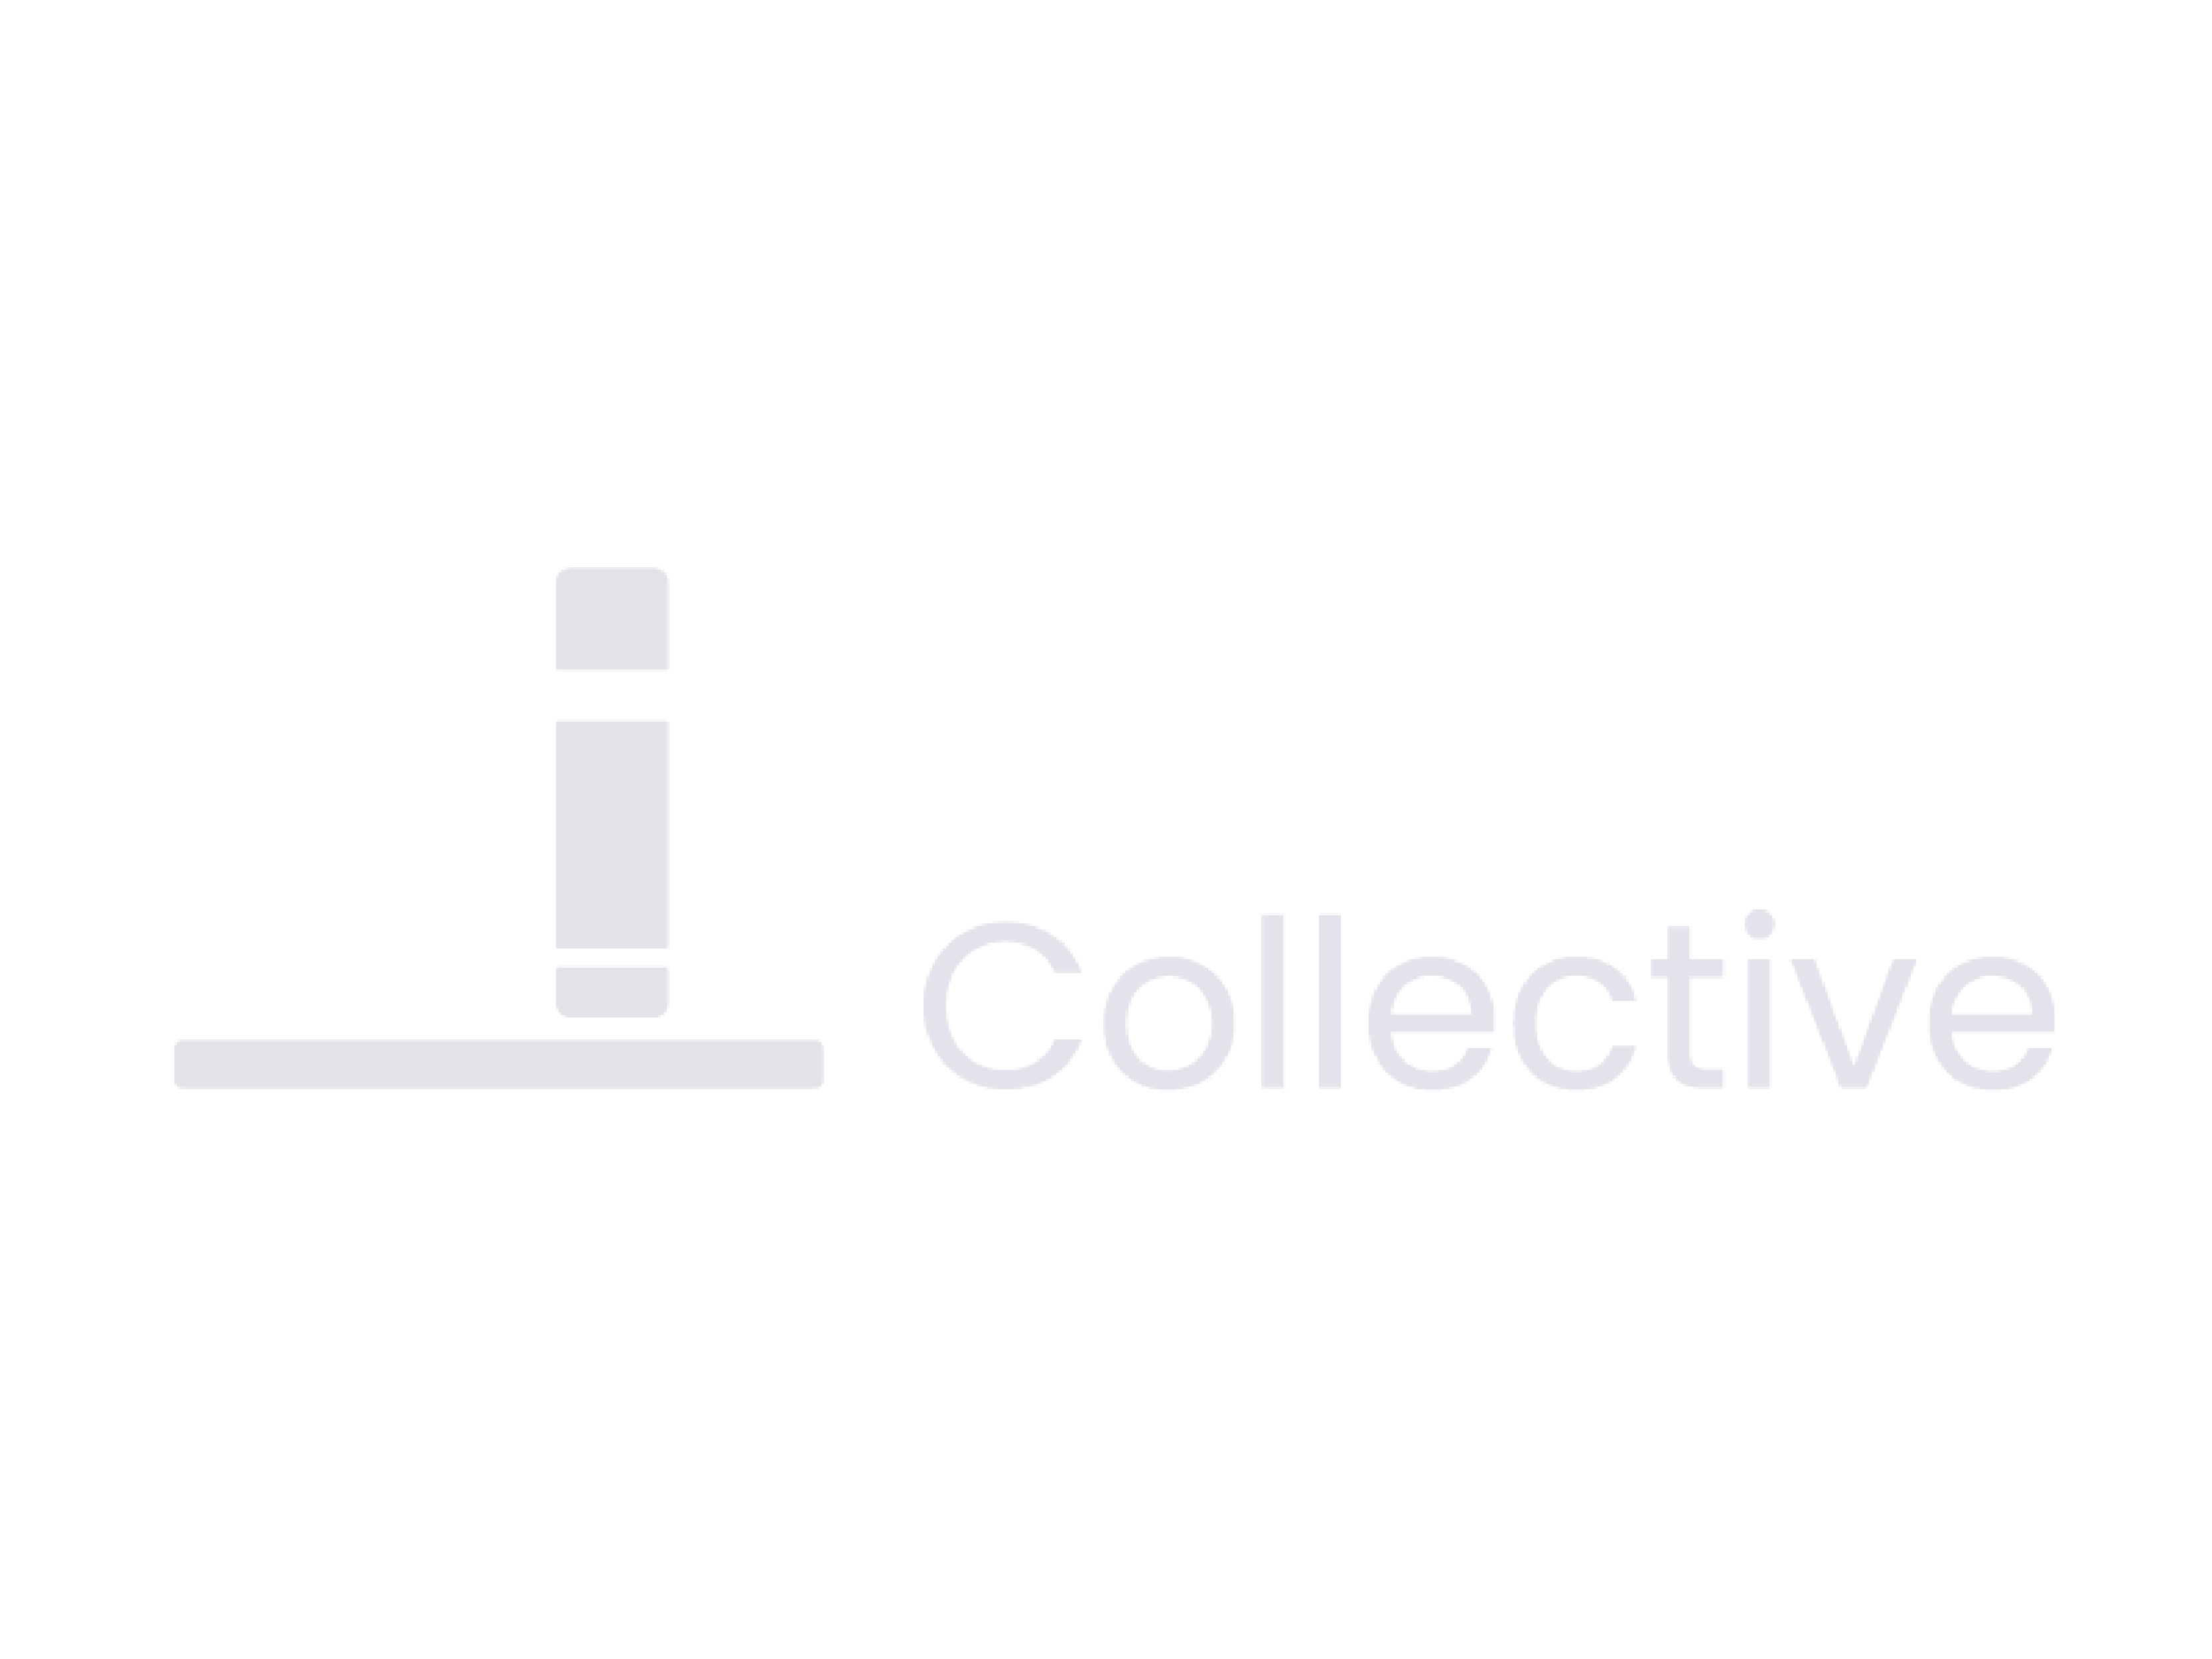 RYE Collective logo